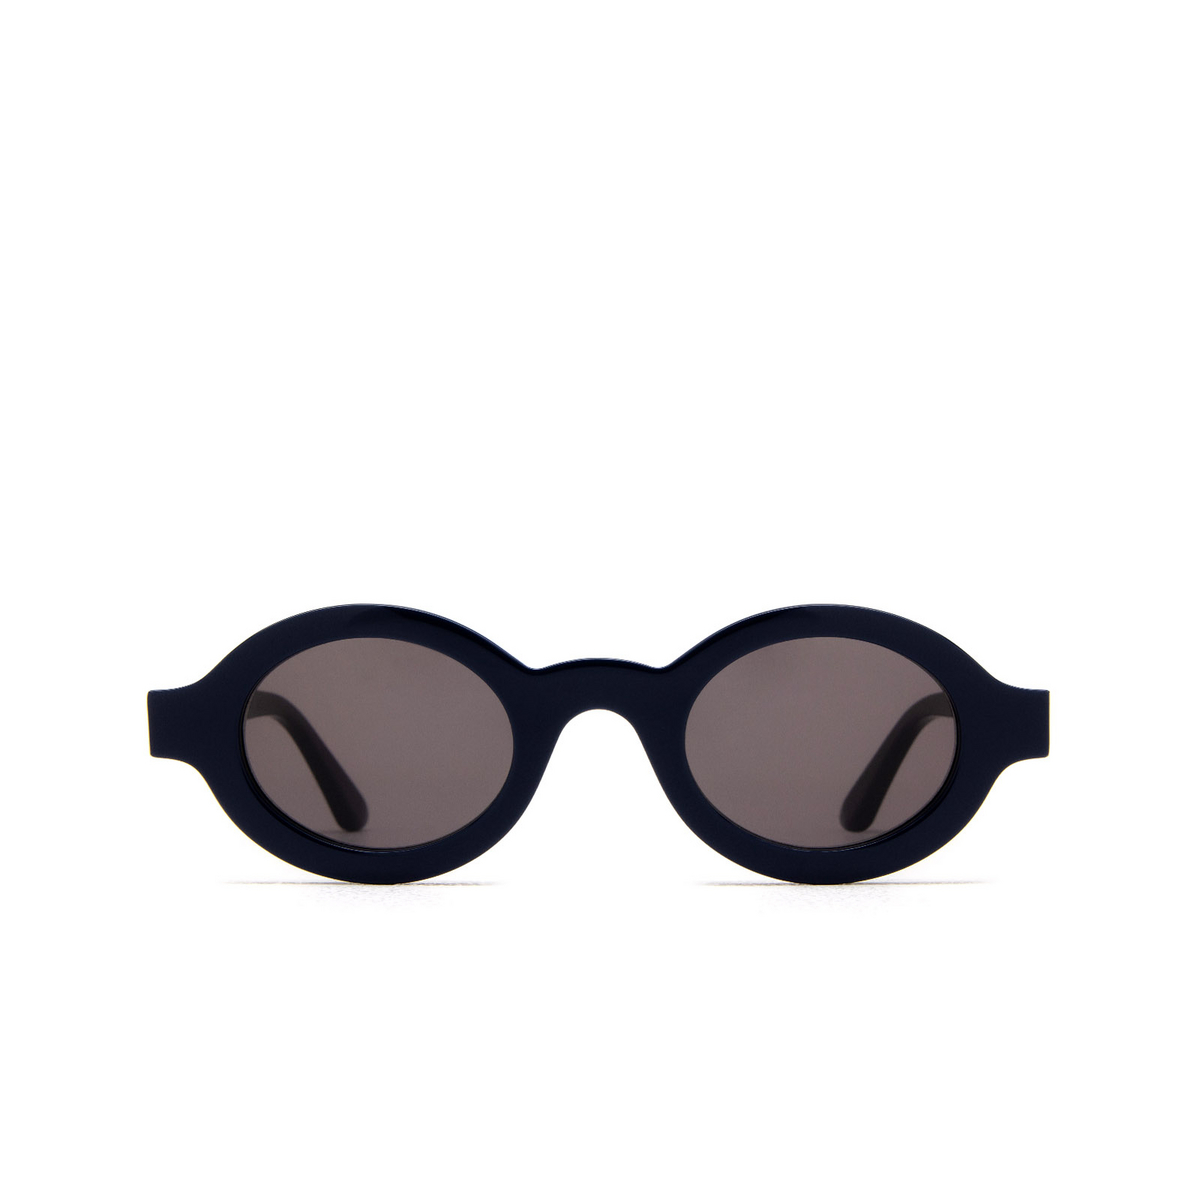 Huma ZOE Sunglasses 03 Blue - front view